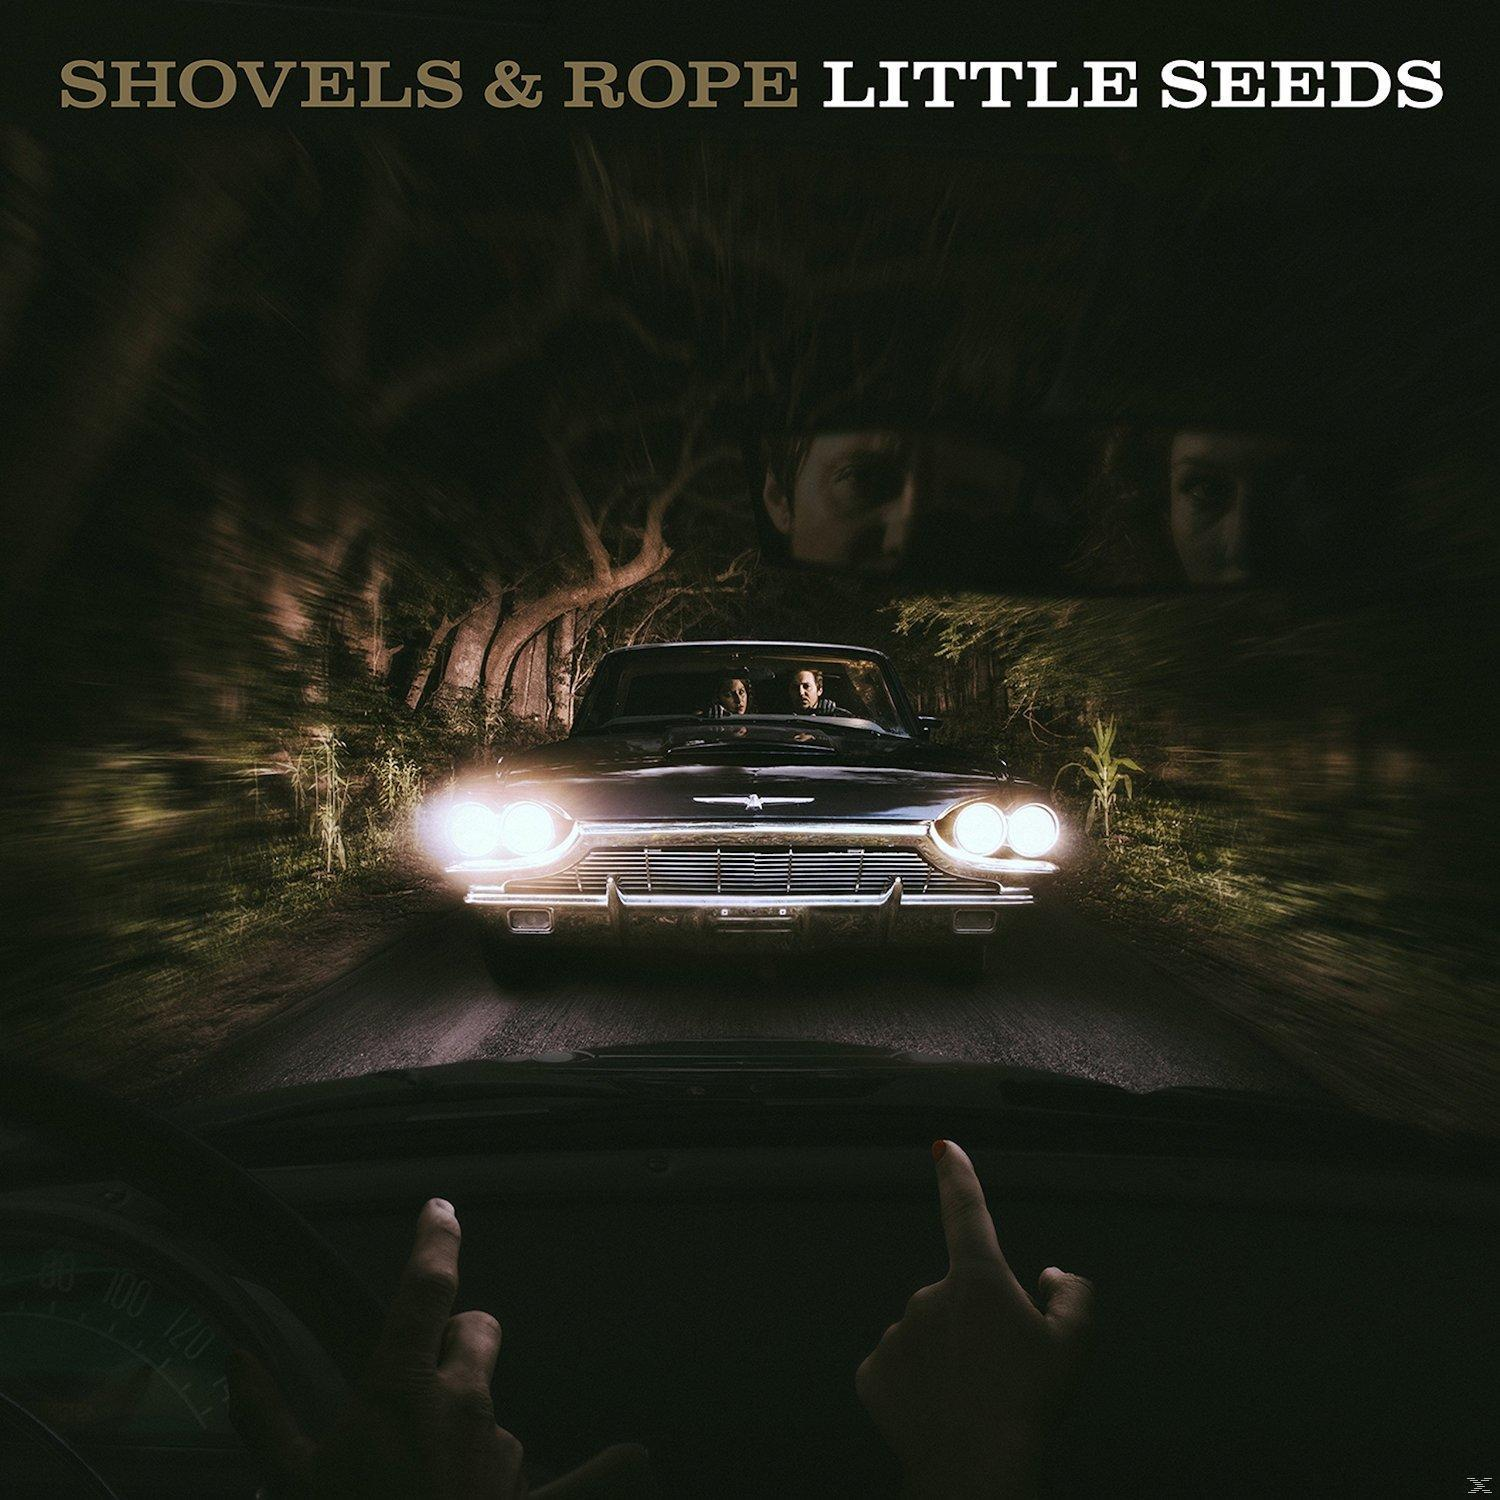 Little Shovels - Rope - (Vinyl) & Seeds